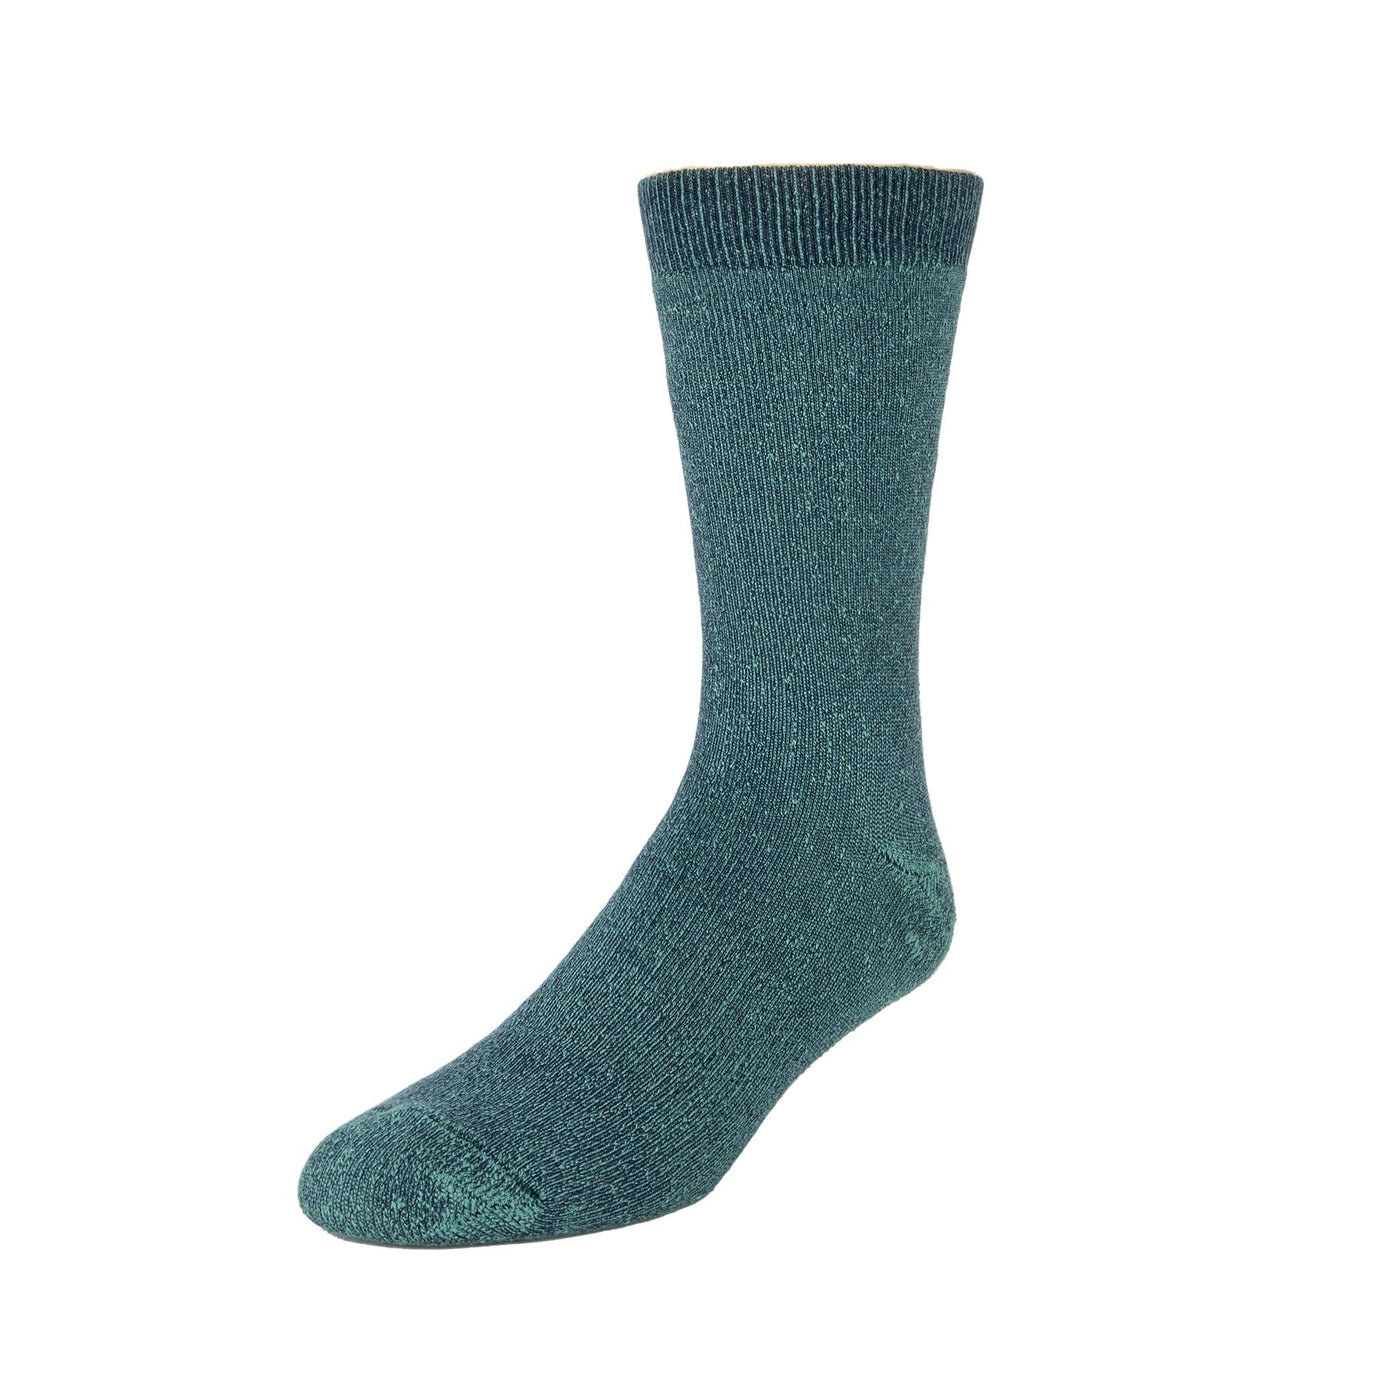 Zkano Boot Socks Large Canyon - Full Cushion Organic Cotton Boot Socks - Fir organic-socks-made-in-usa